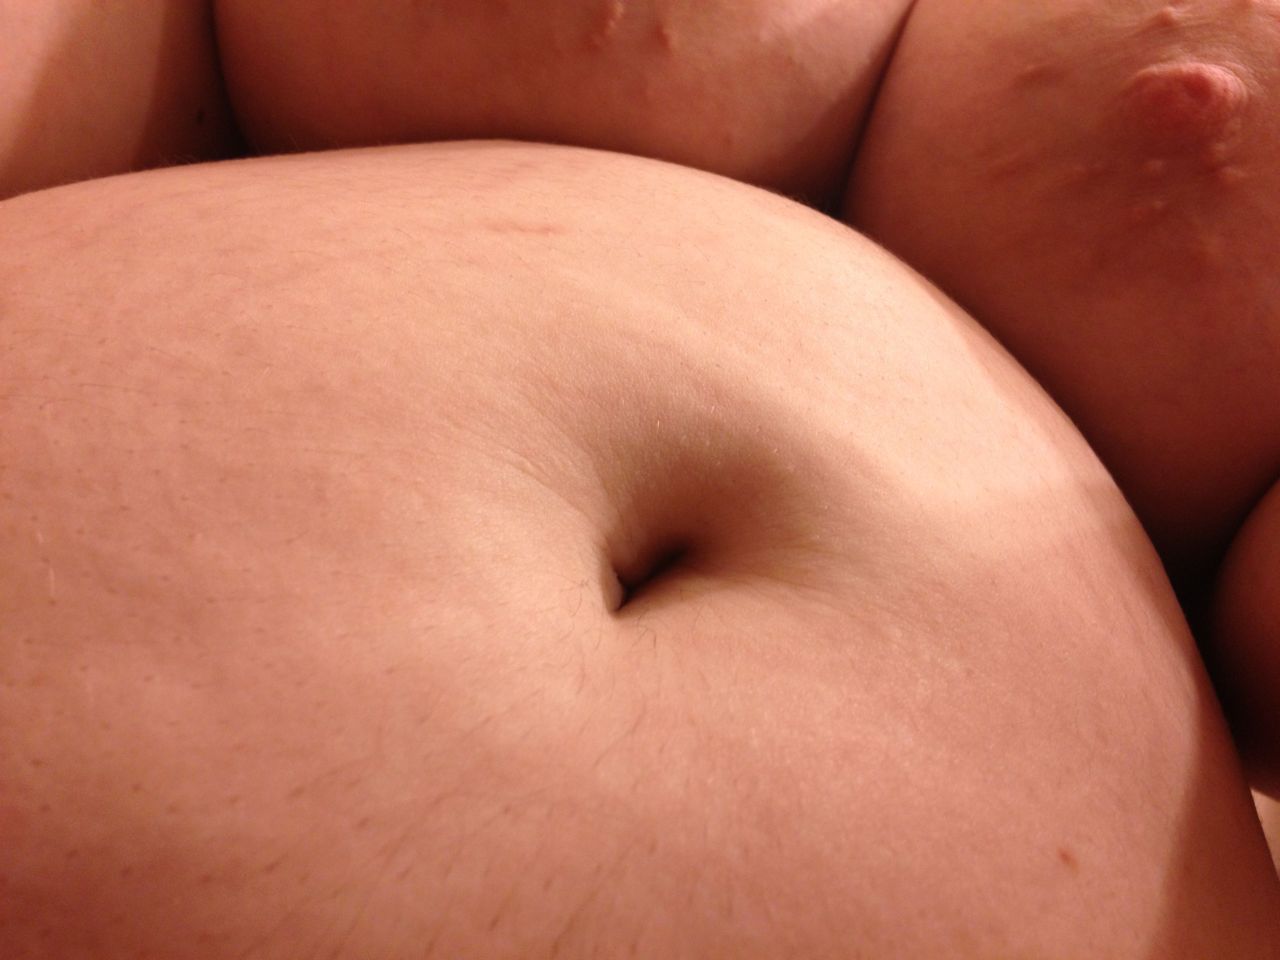 Big nipples, big tits, big belly, and a little hair, too. Yummm. &lt;3